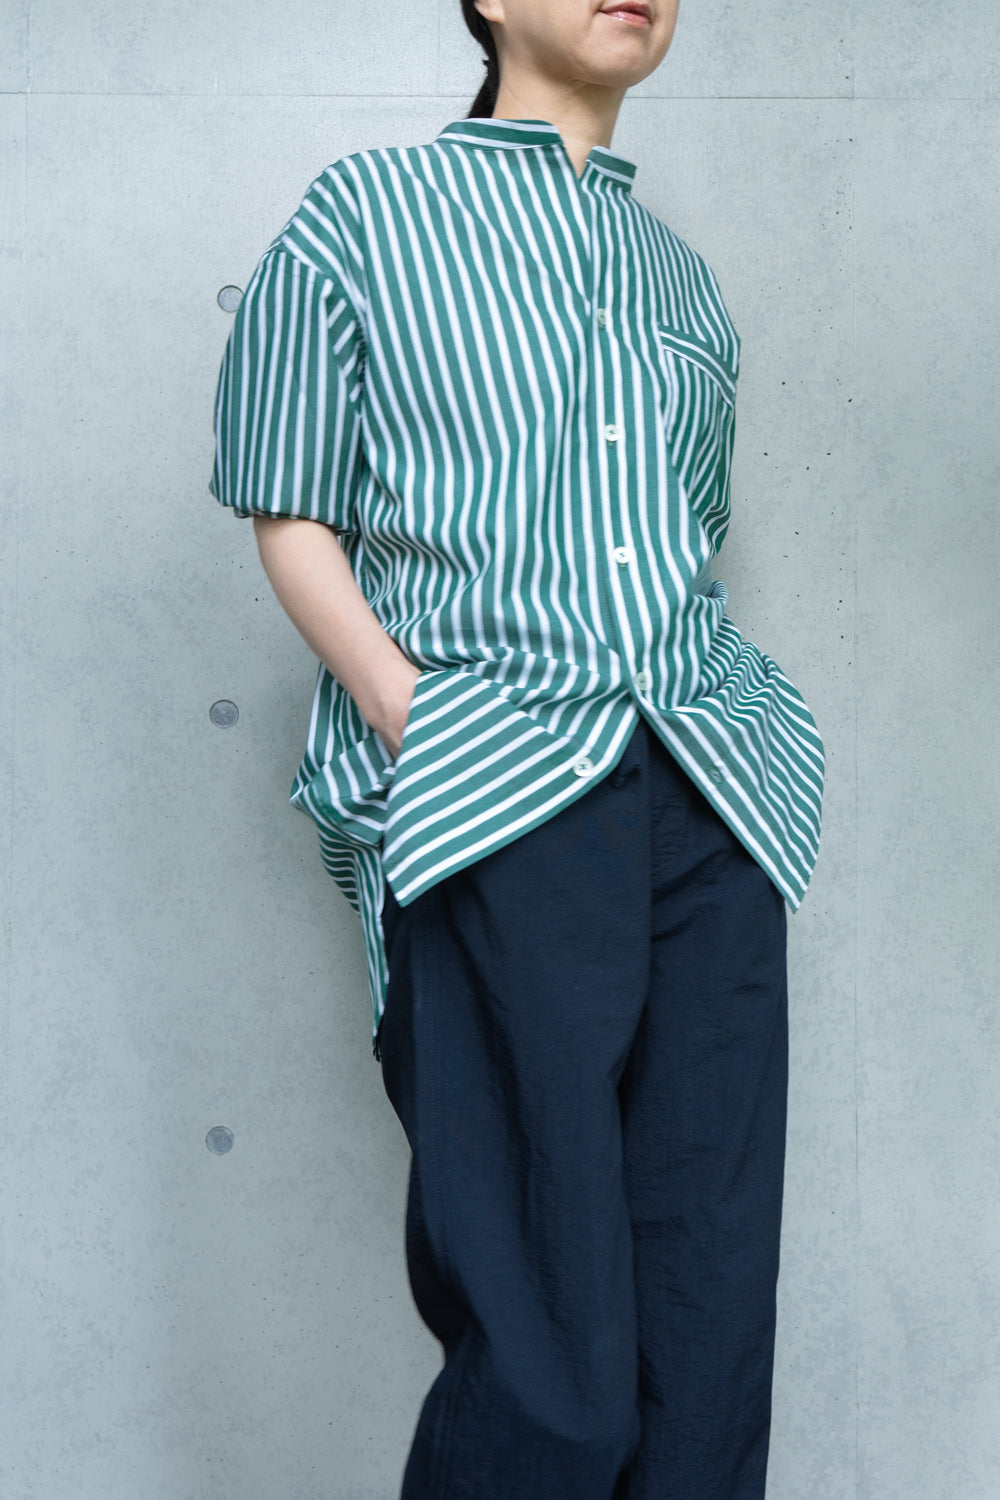 his shirt-green stripe